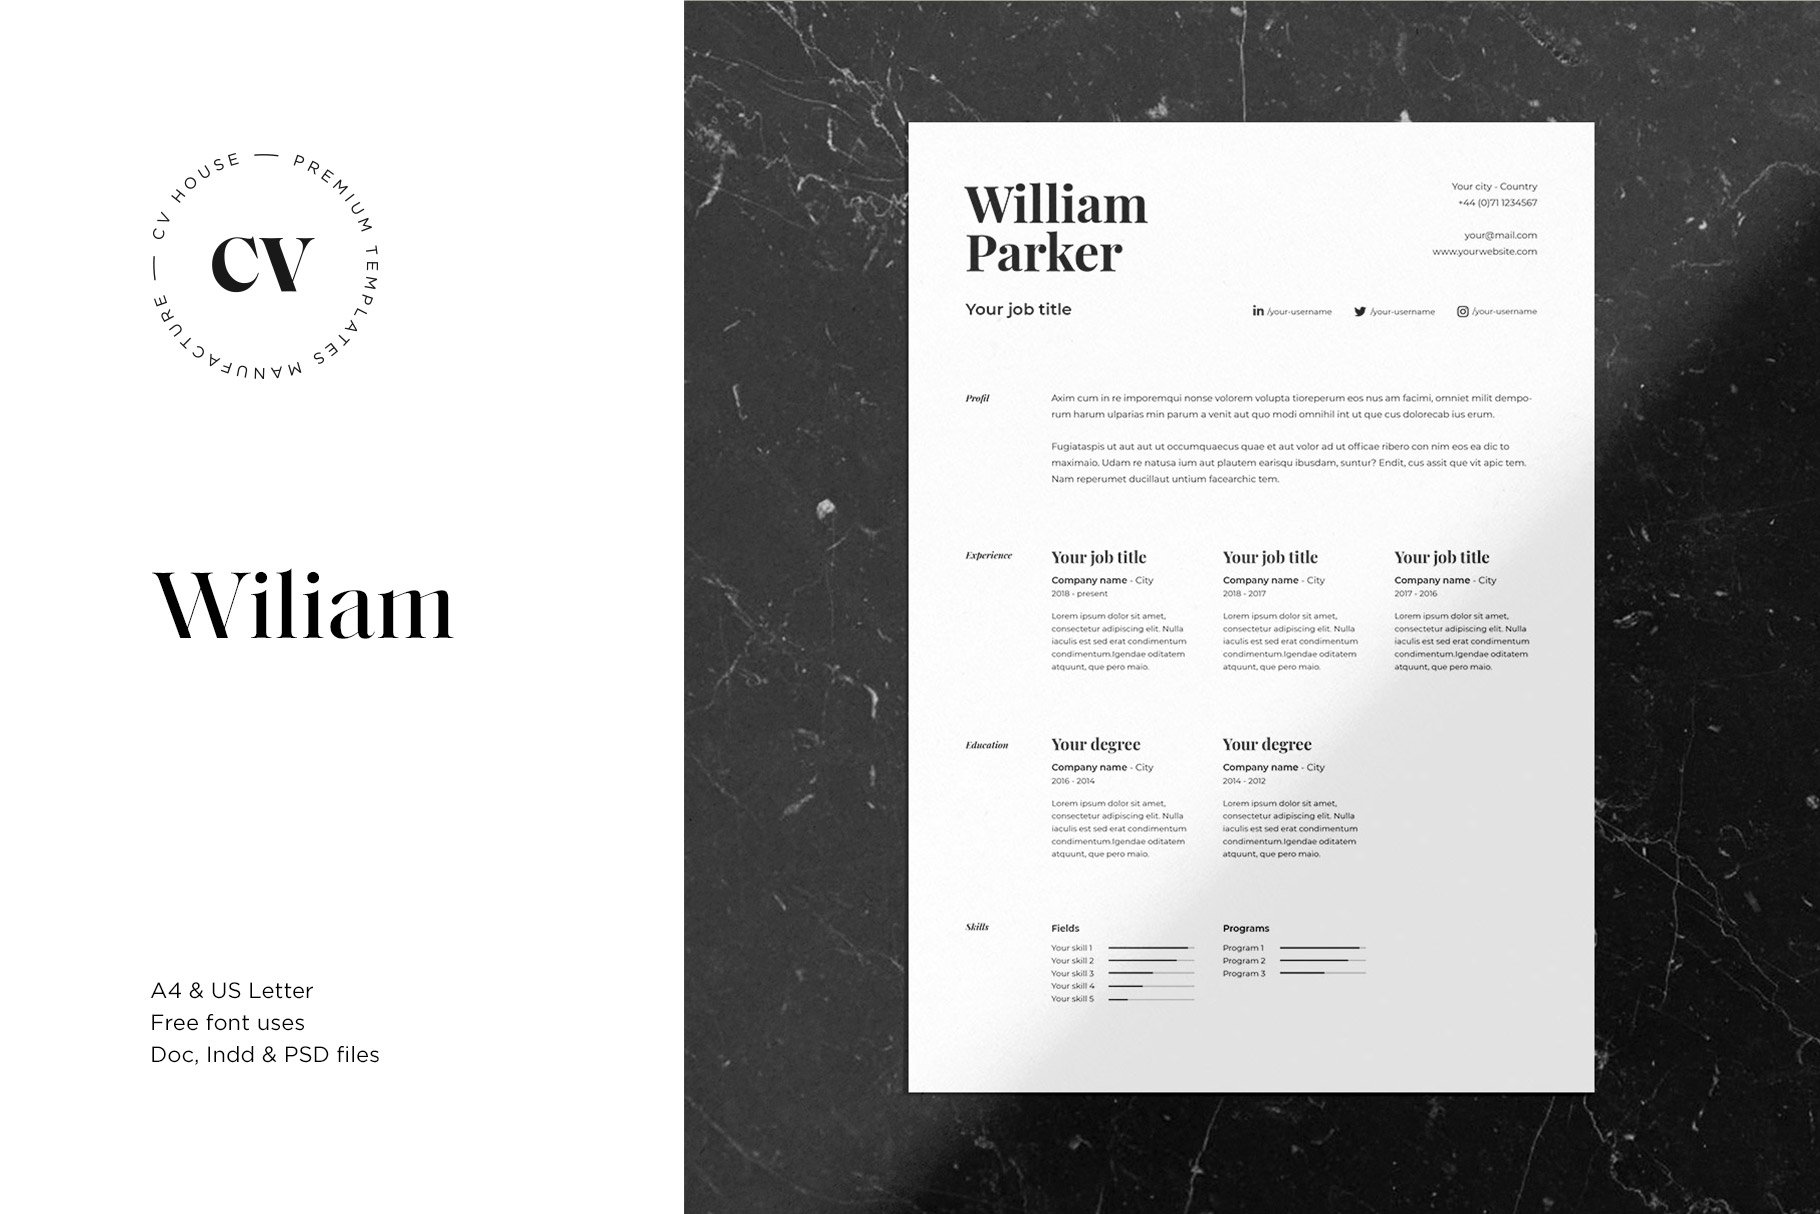 William | CV / resume template cover image.